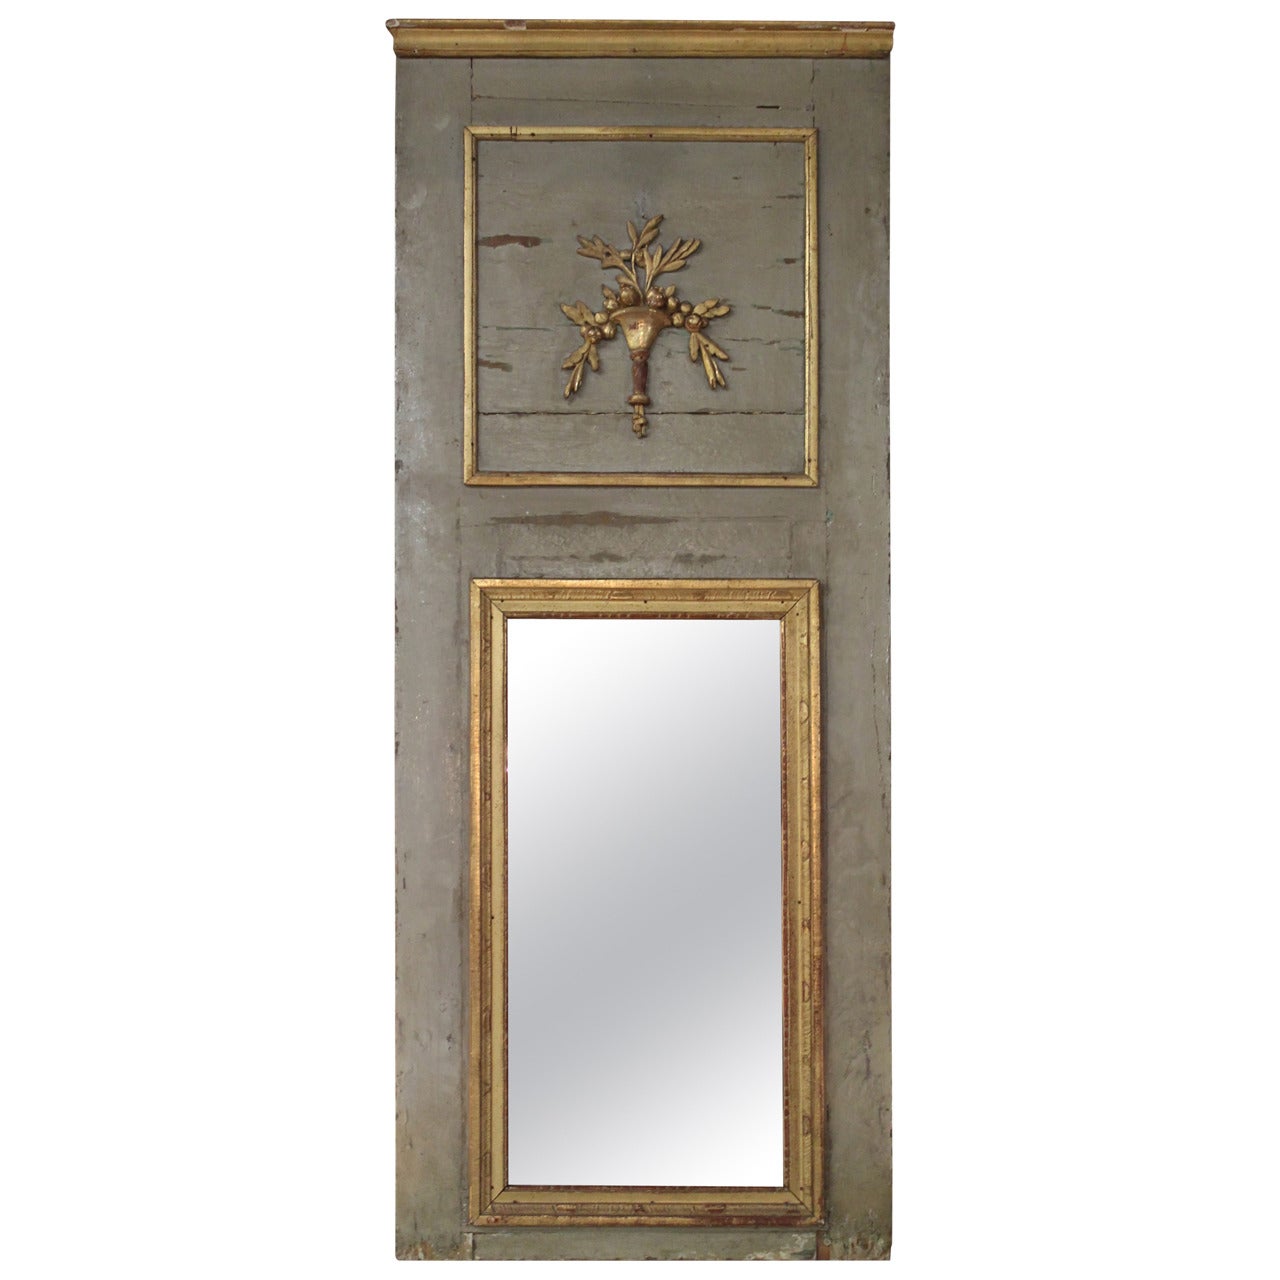 18th Century French Trumeau Mirror